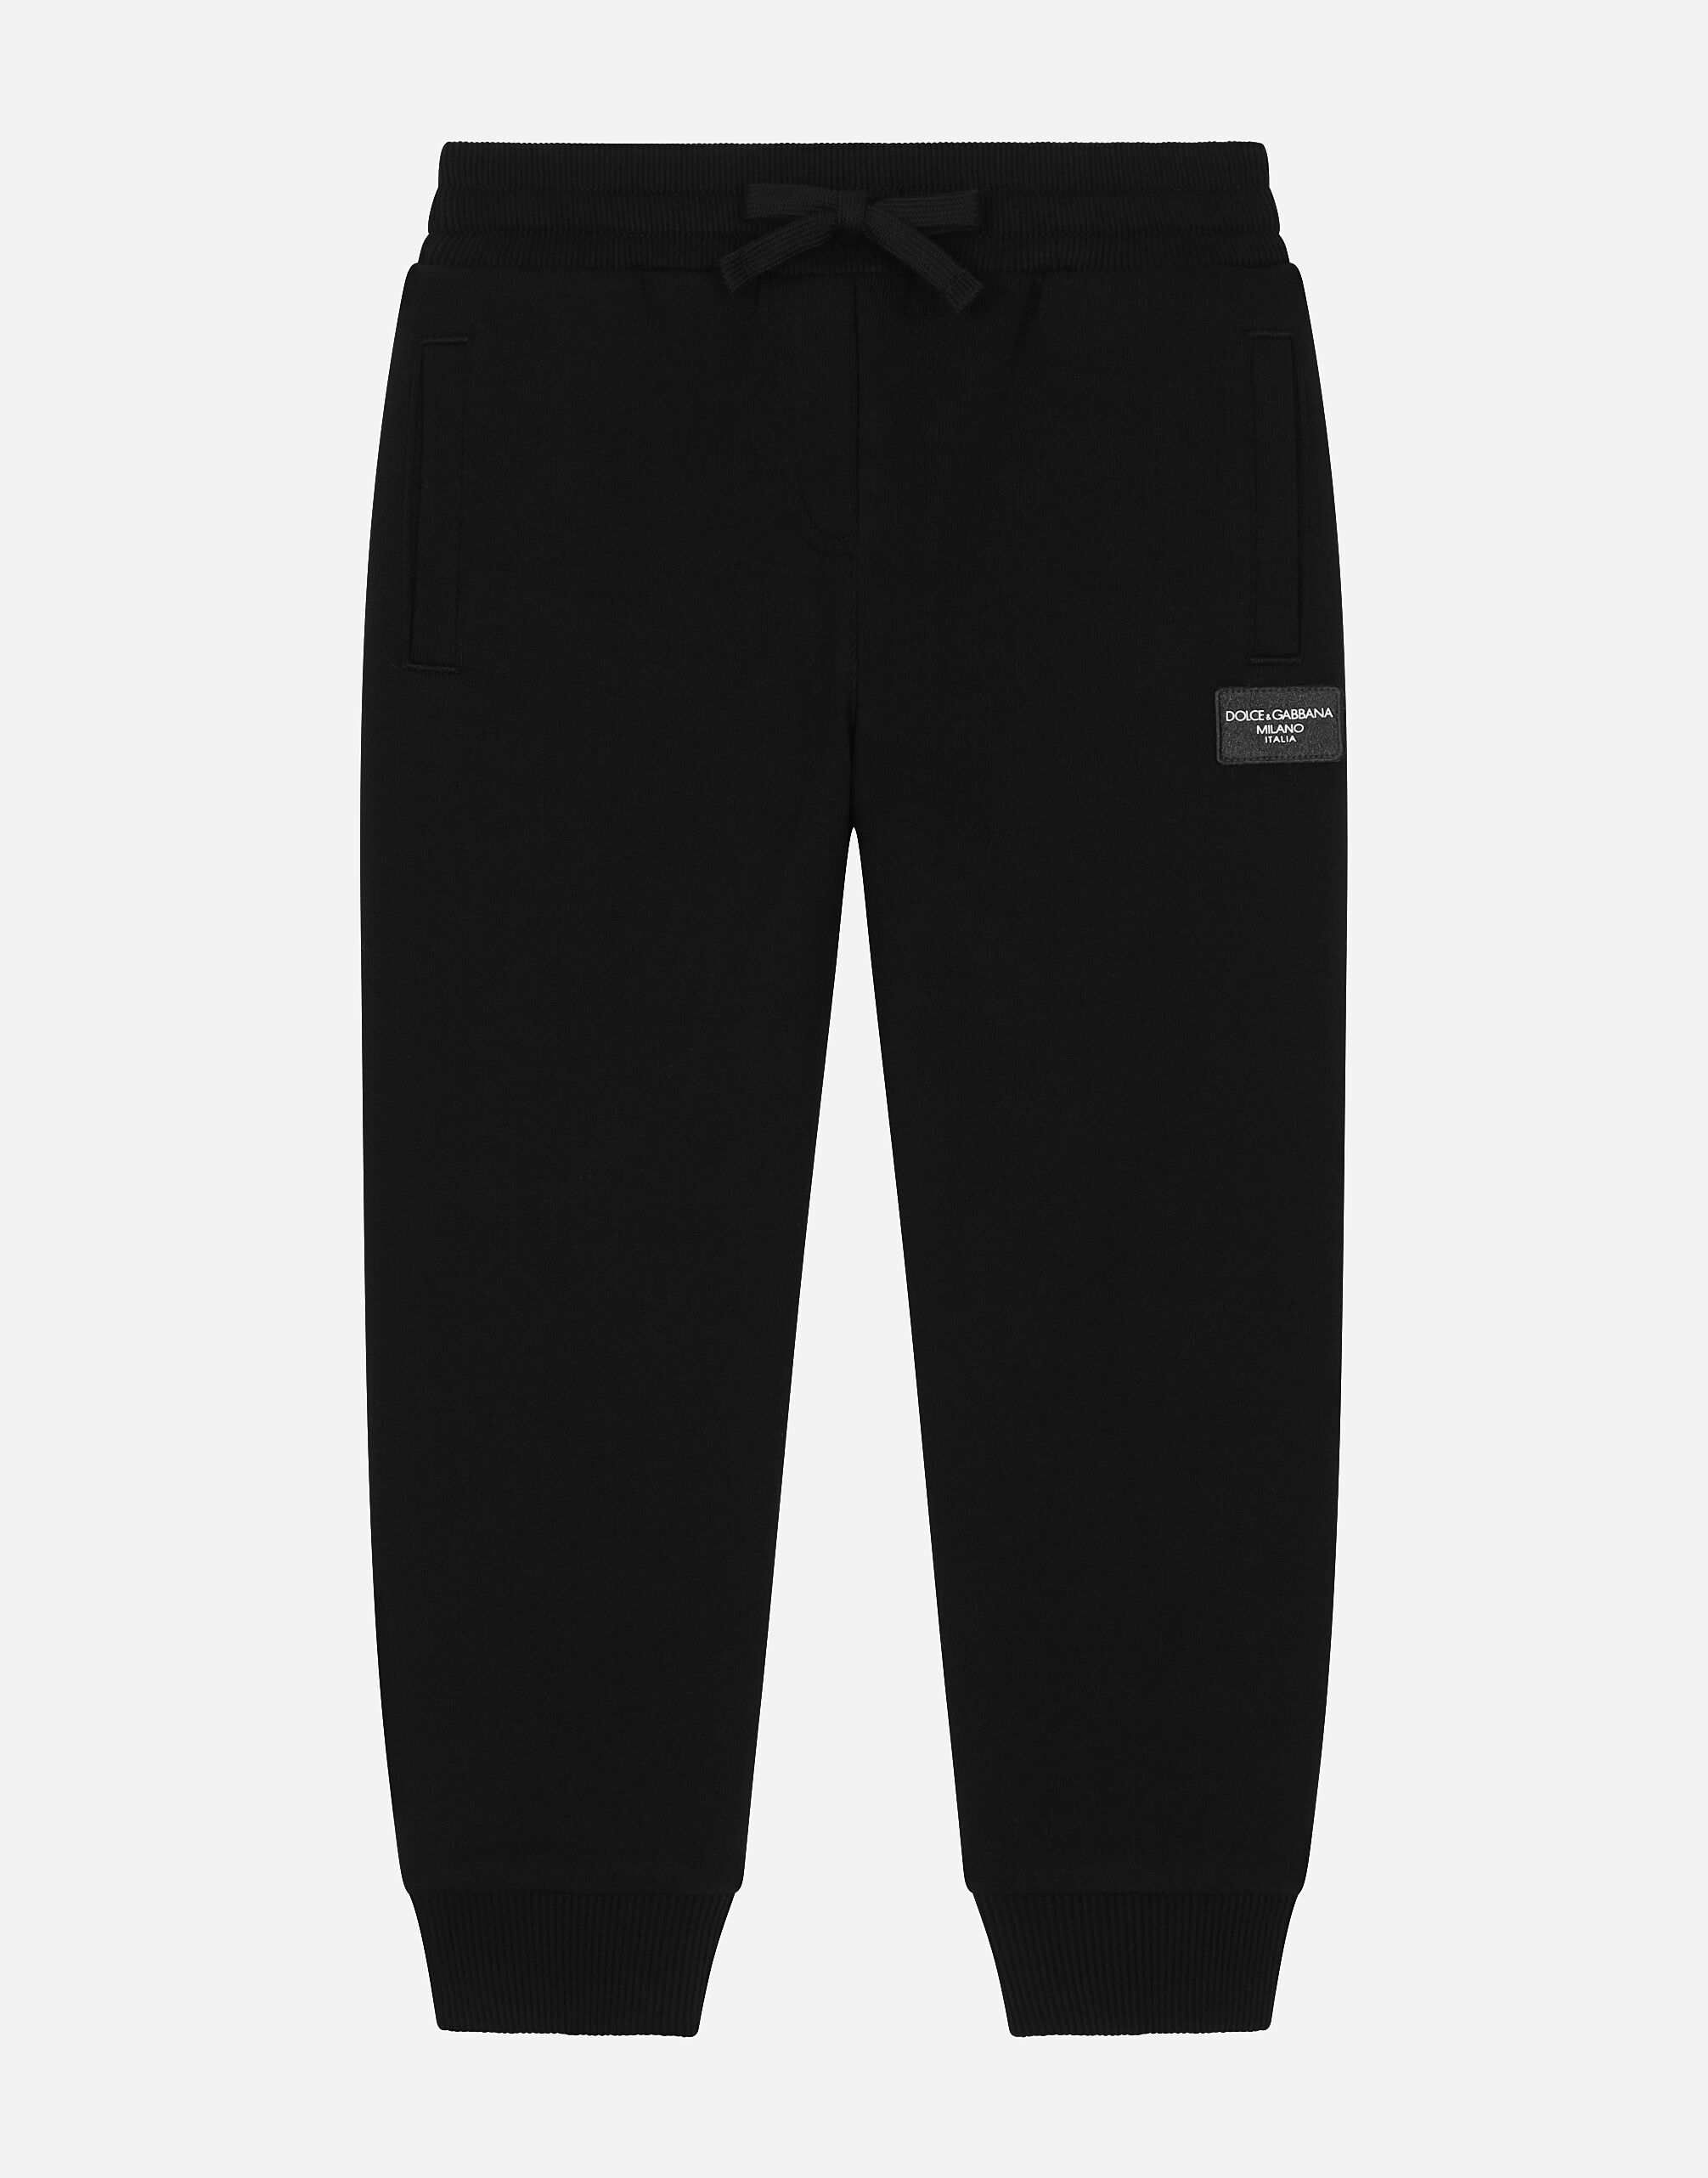 Dolce & Gabbana Jersey jogging pants with logo patch Print L55I27FI5JU